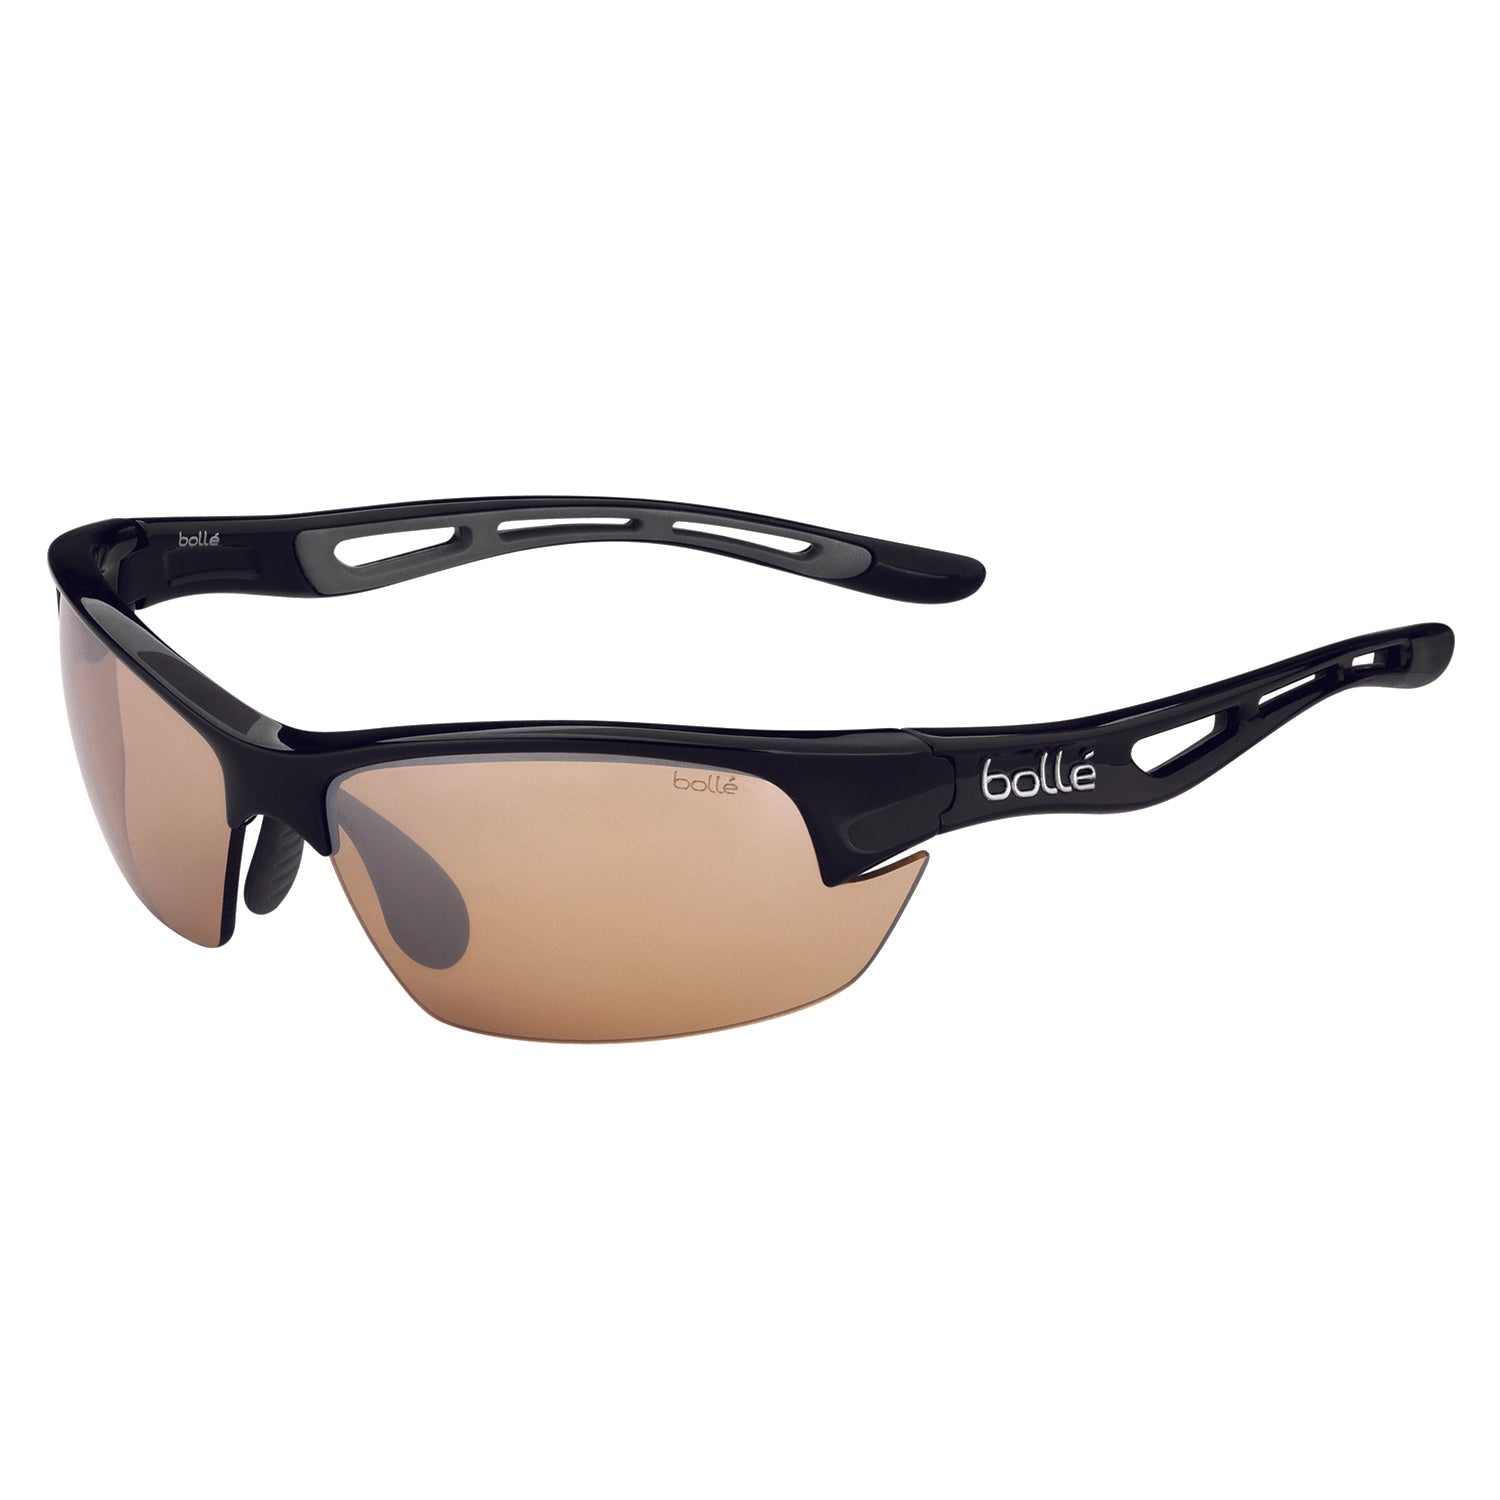 Sunglasses - Bolle Bolt S Sunglasses - 11781 / SHINY BLACK 